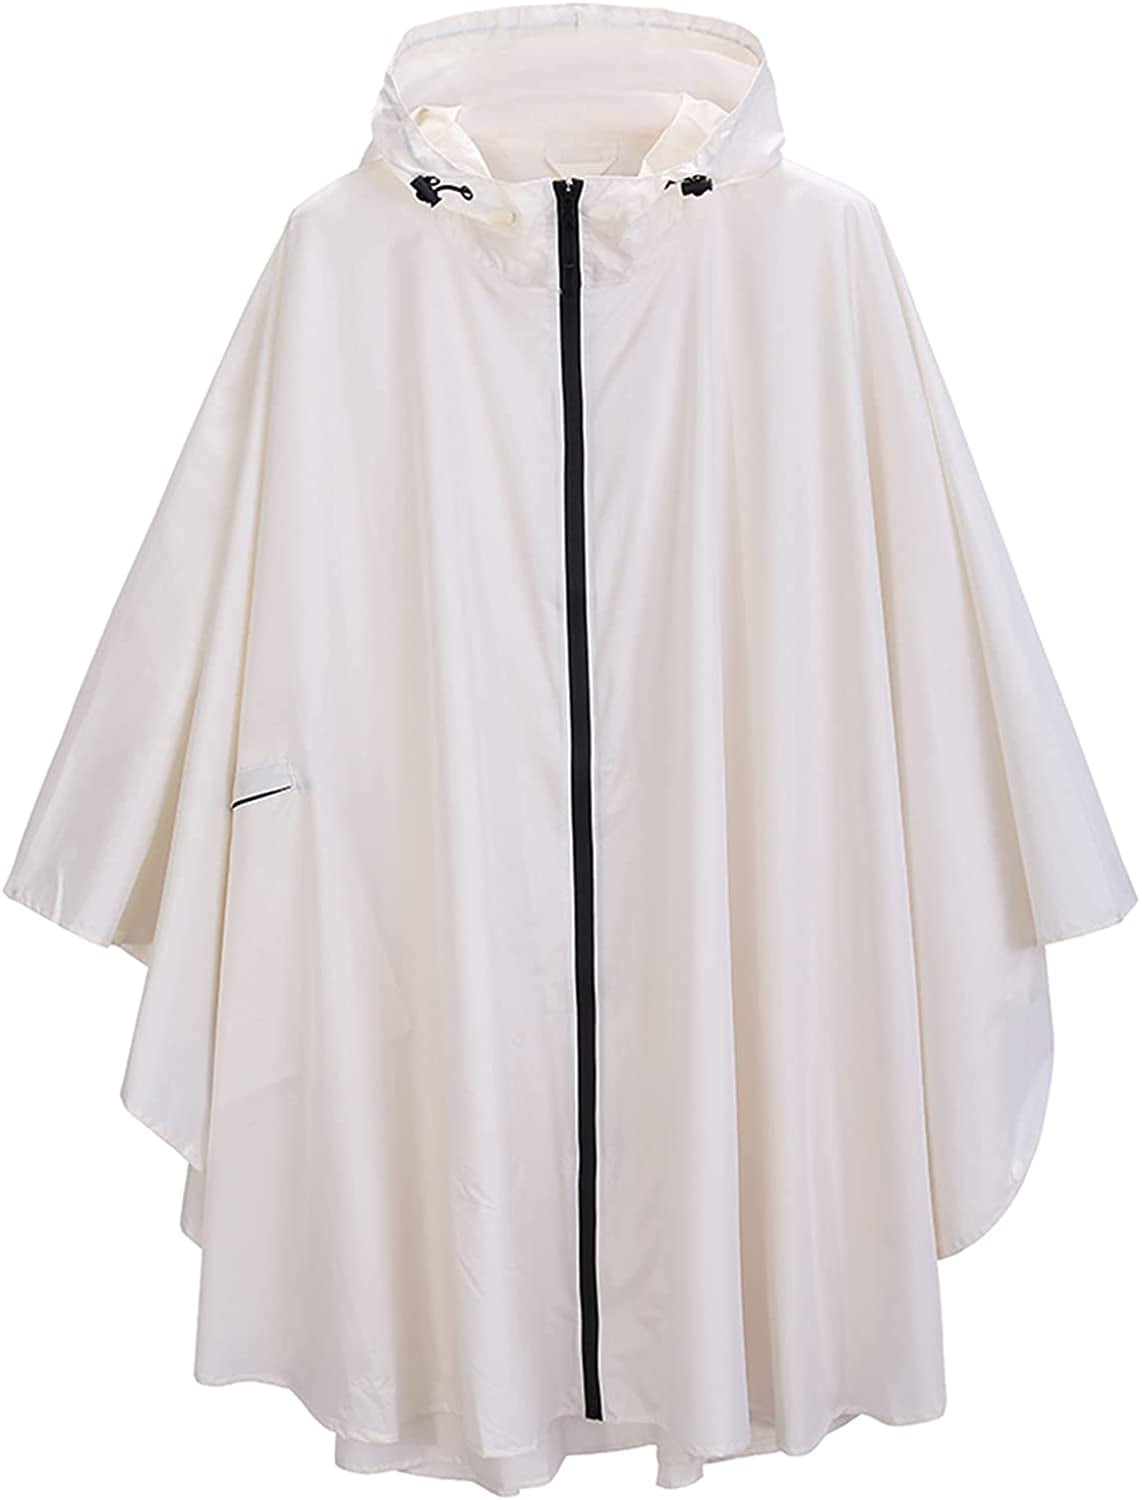 Women Waterproof Rain Wear Poncho Cloak Fashion Hooded Raincoat With Big Pocket 